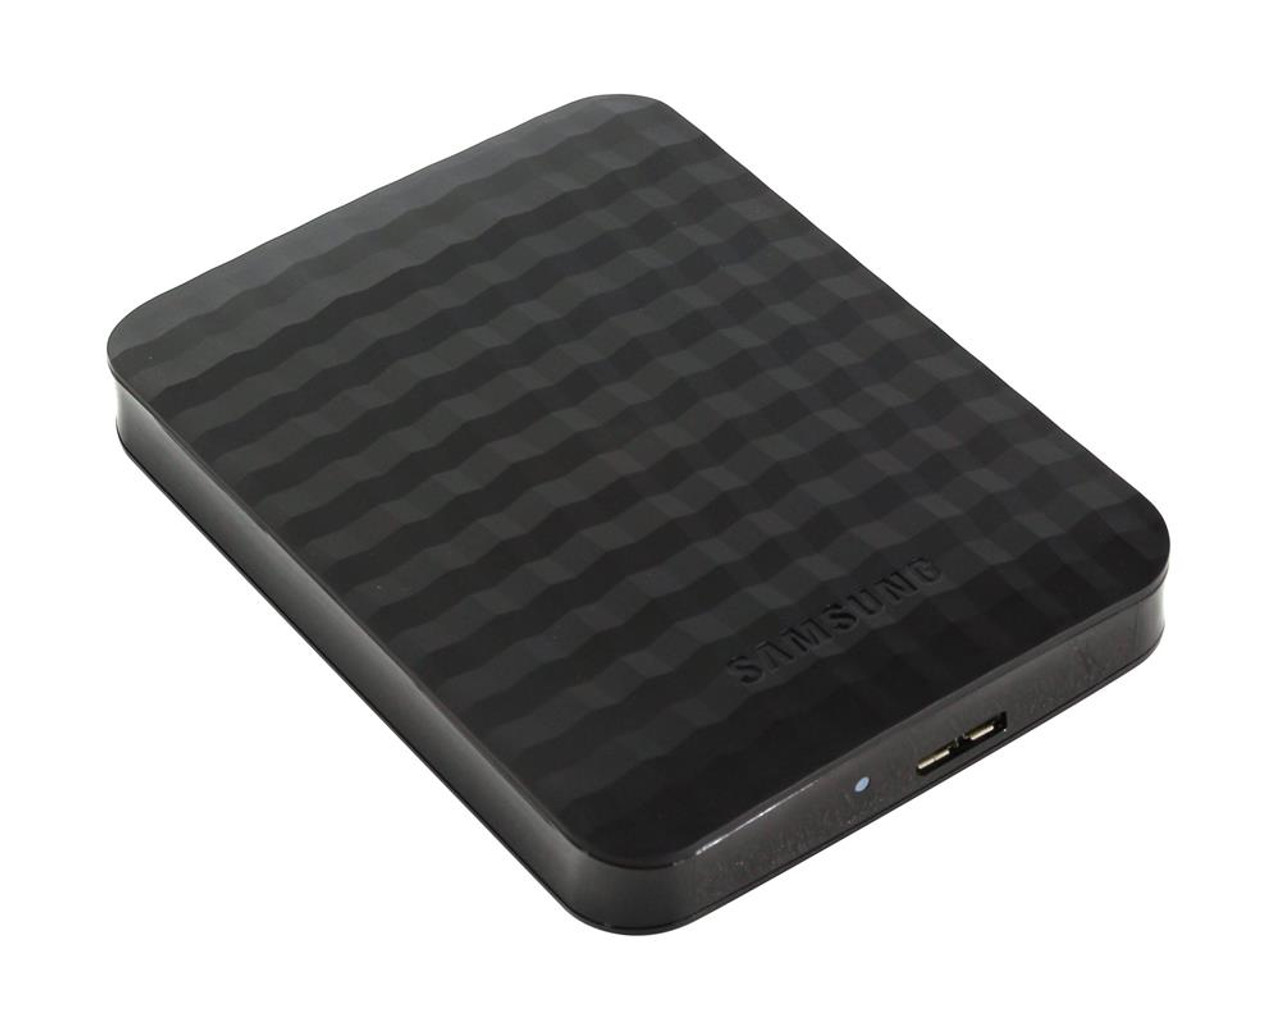 STSHX-M500TCB M3 Portable External Drive 500GB